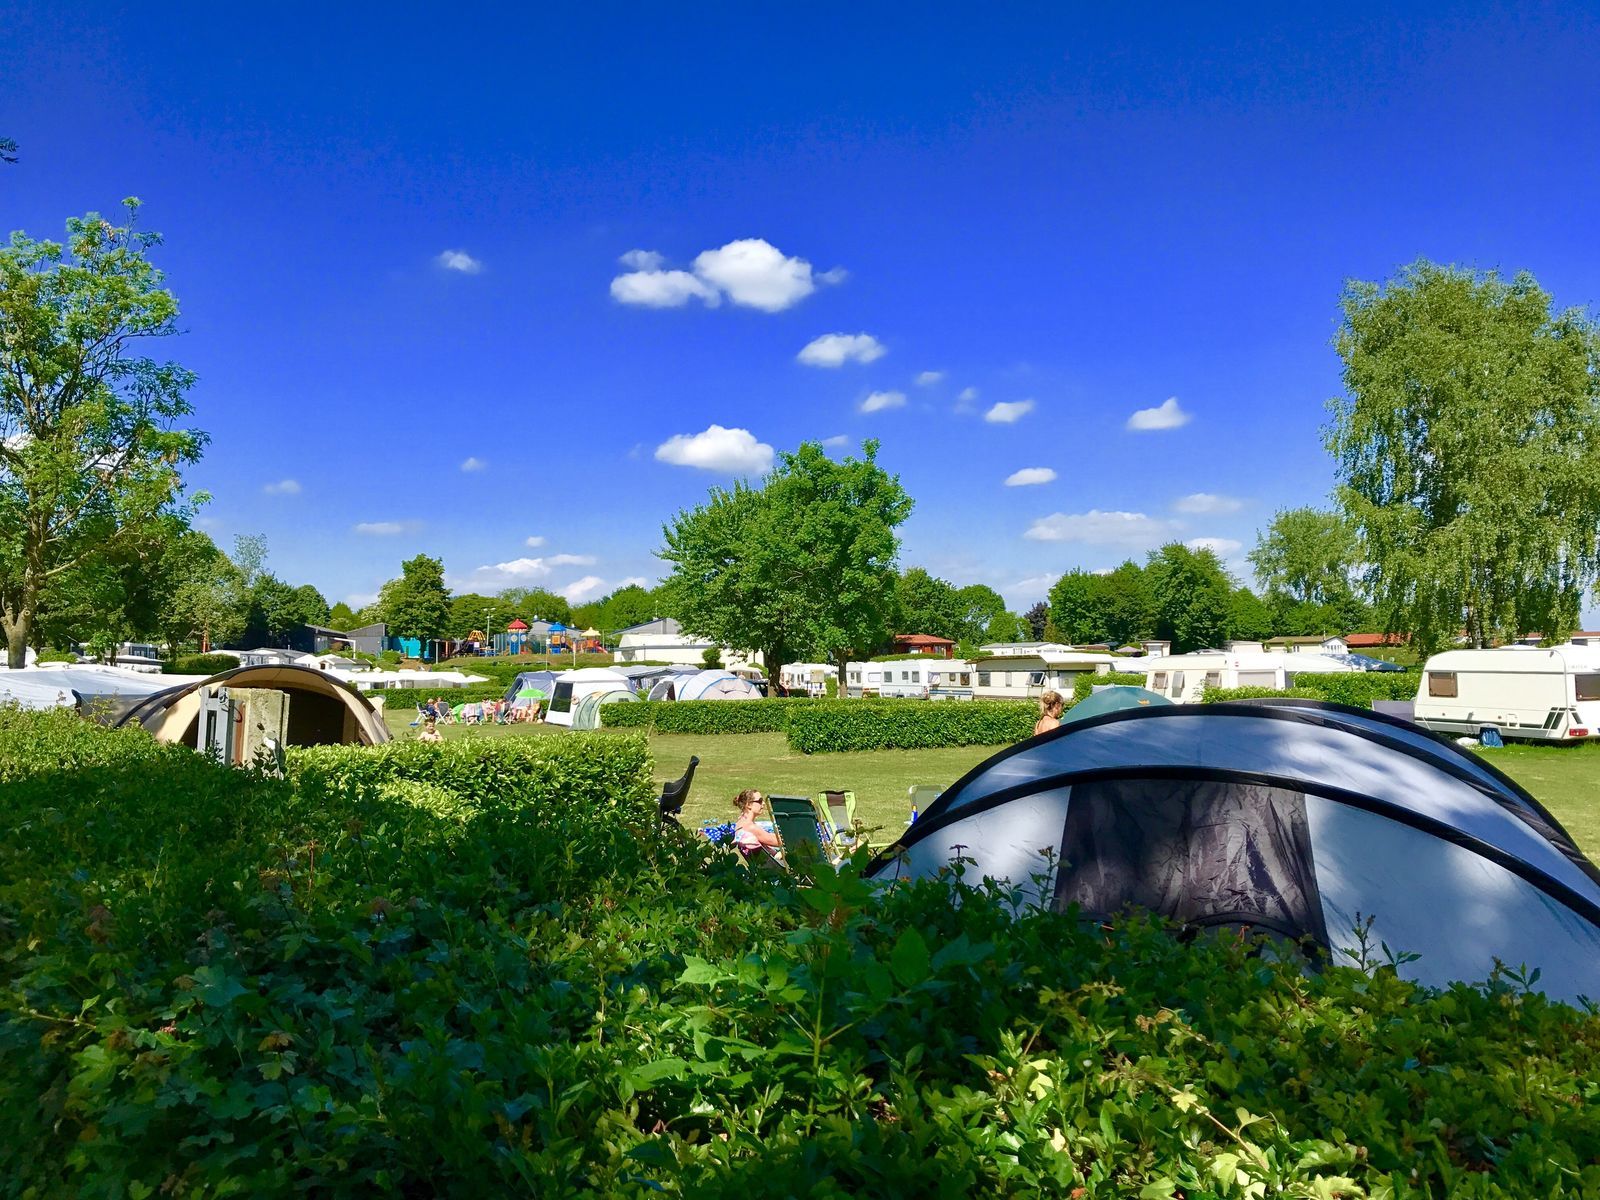 Camping-Stellplatz auf dem Feld am inneren Ring